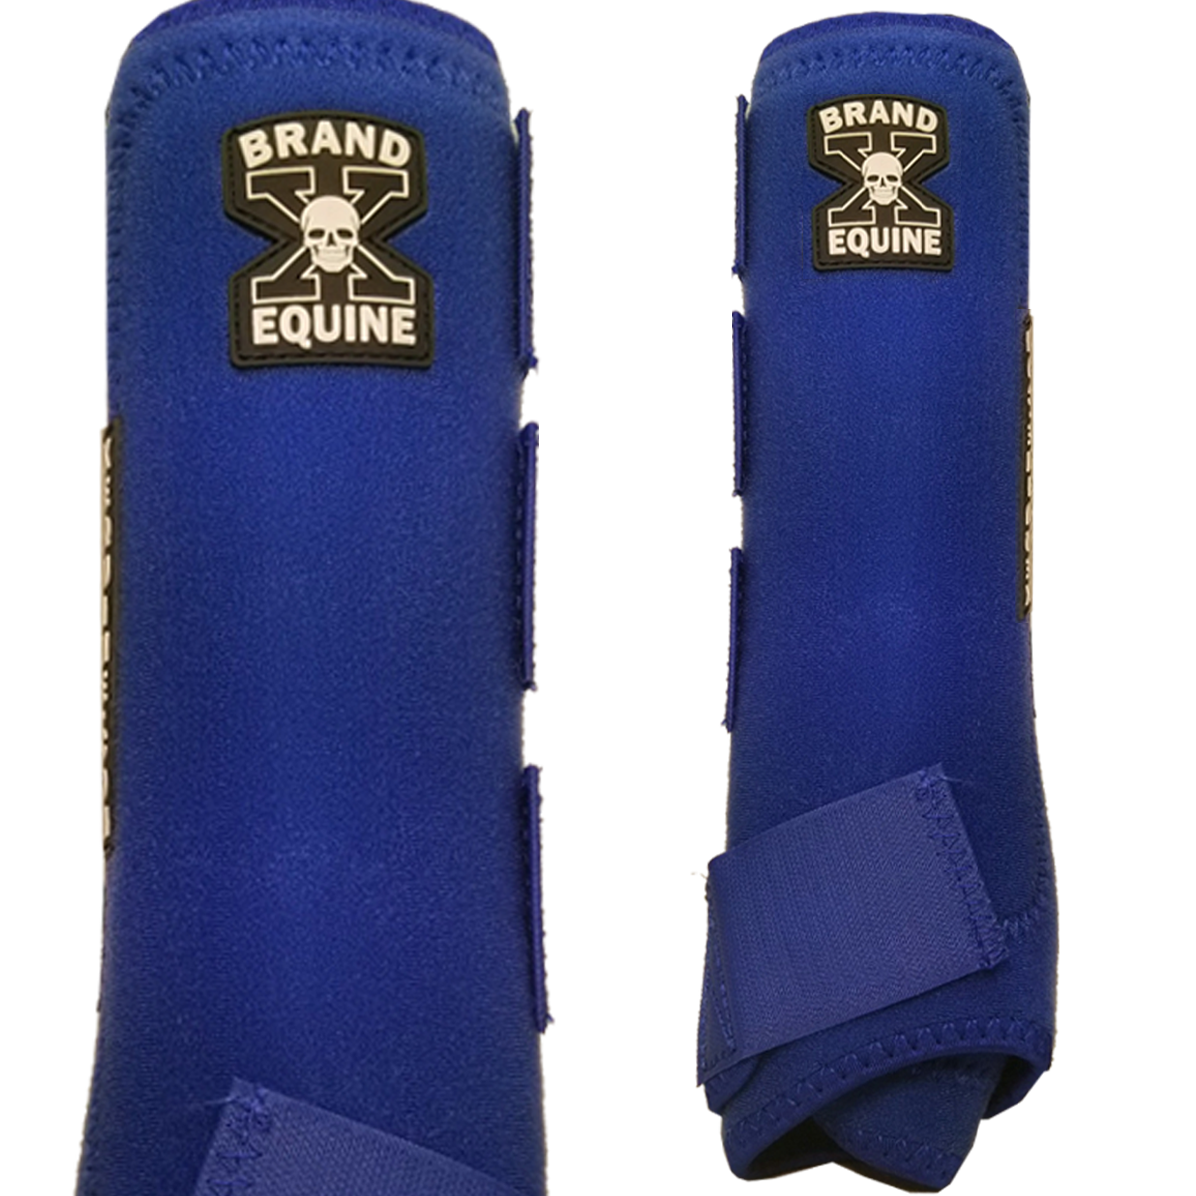 Premium Hind Sport Boots - Blue